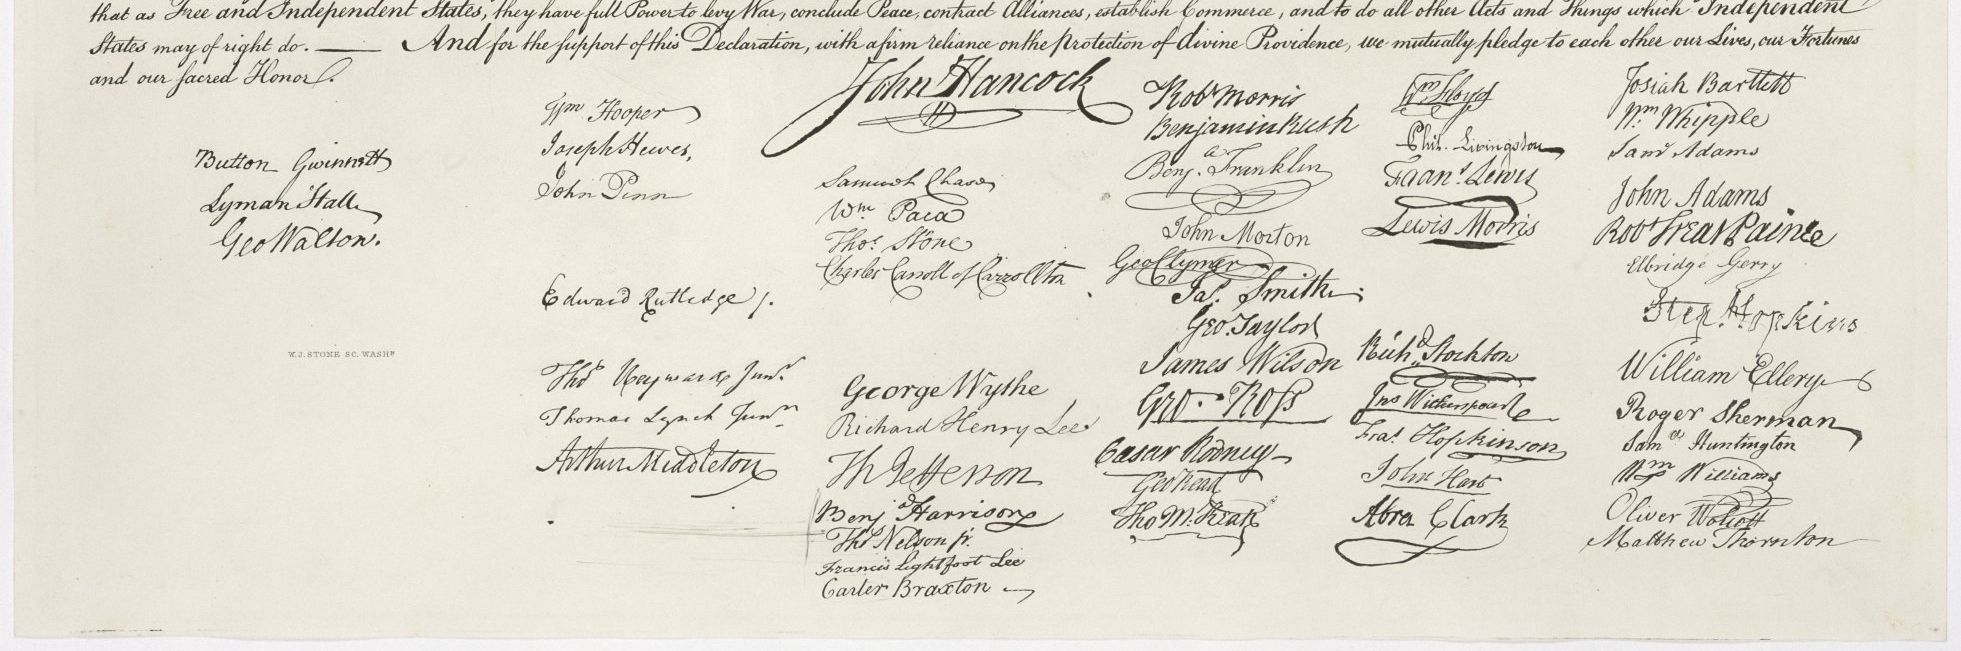 file-us-declaration-independence-signatures-jpg